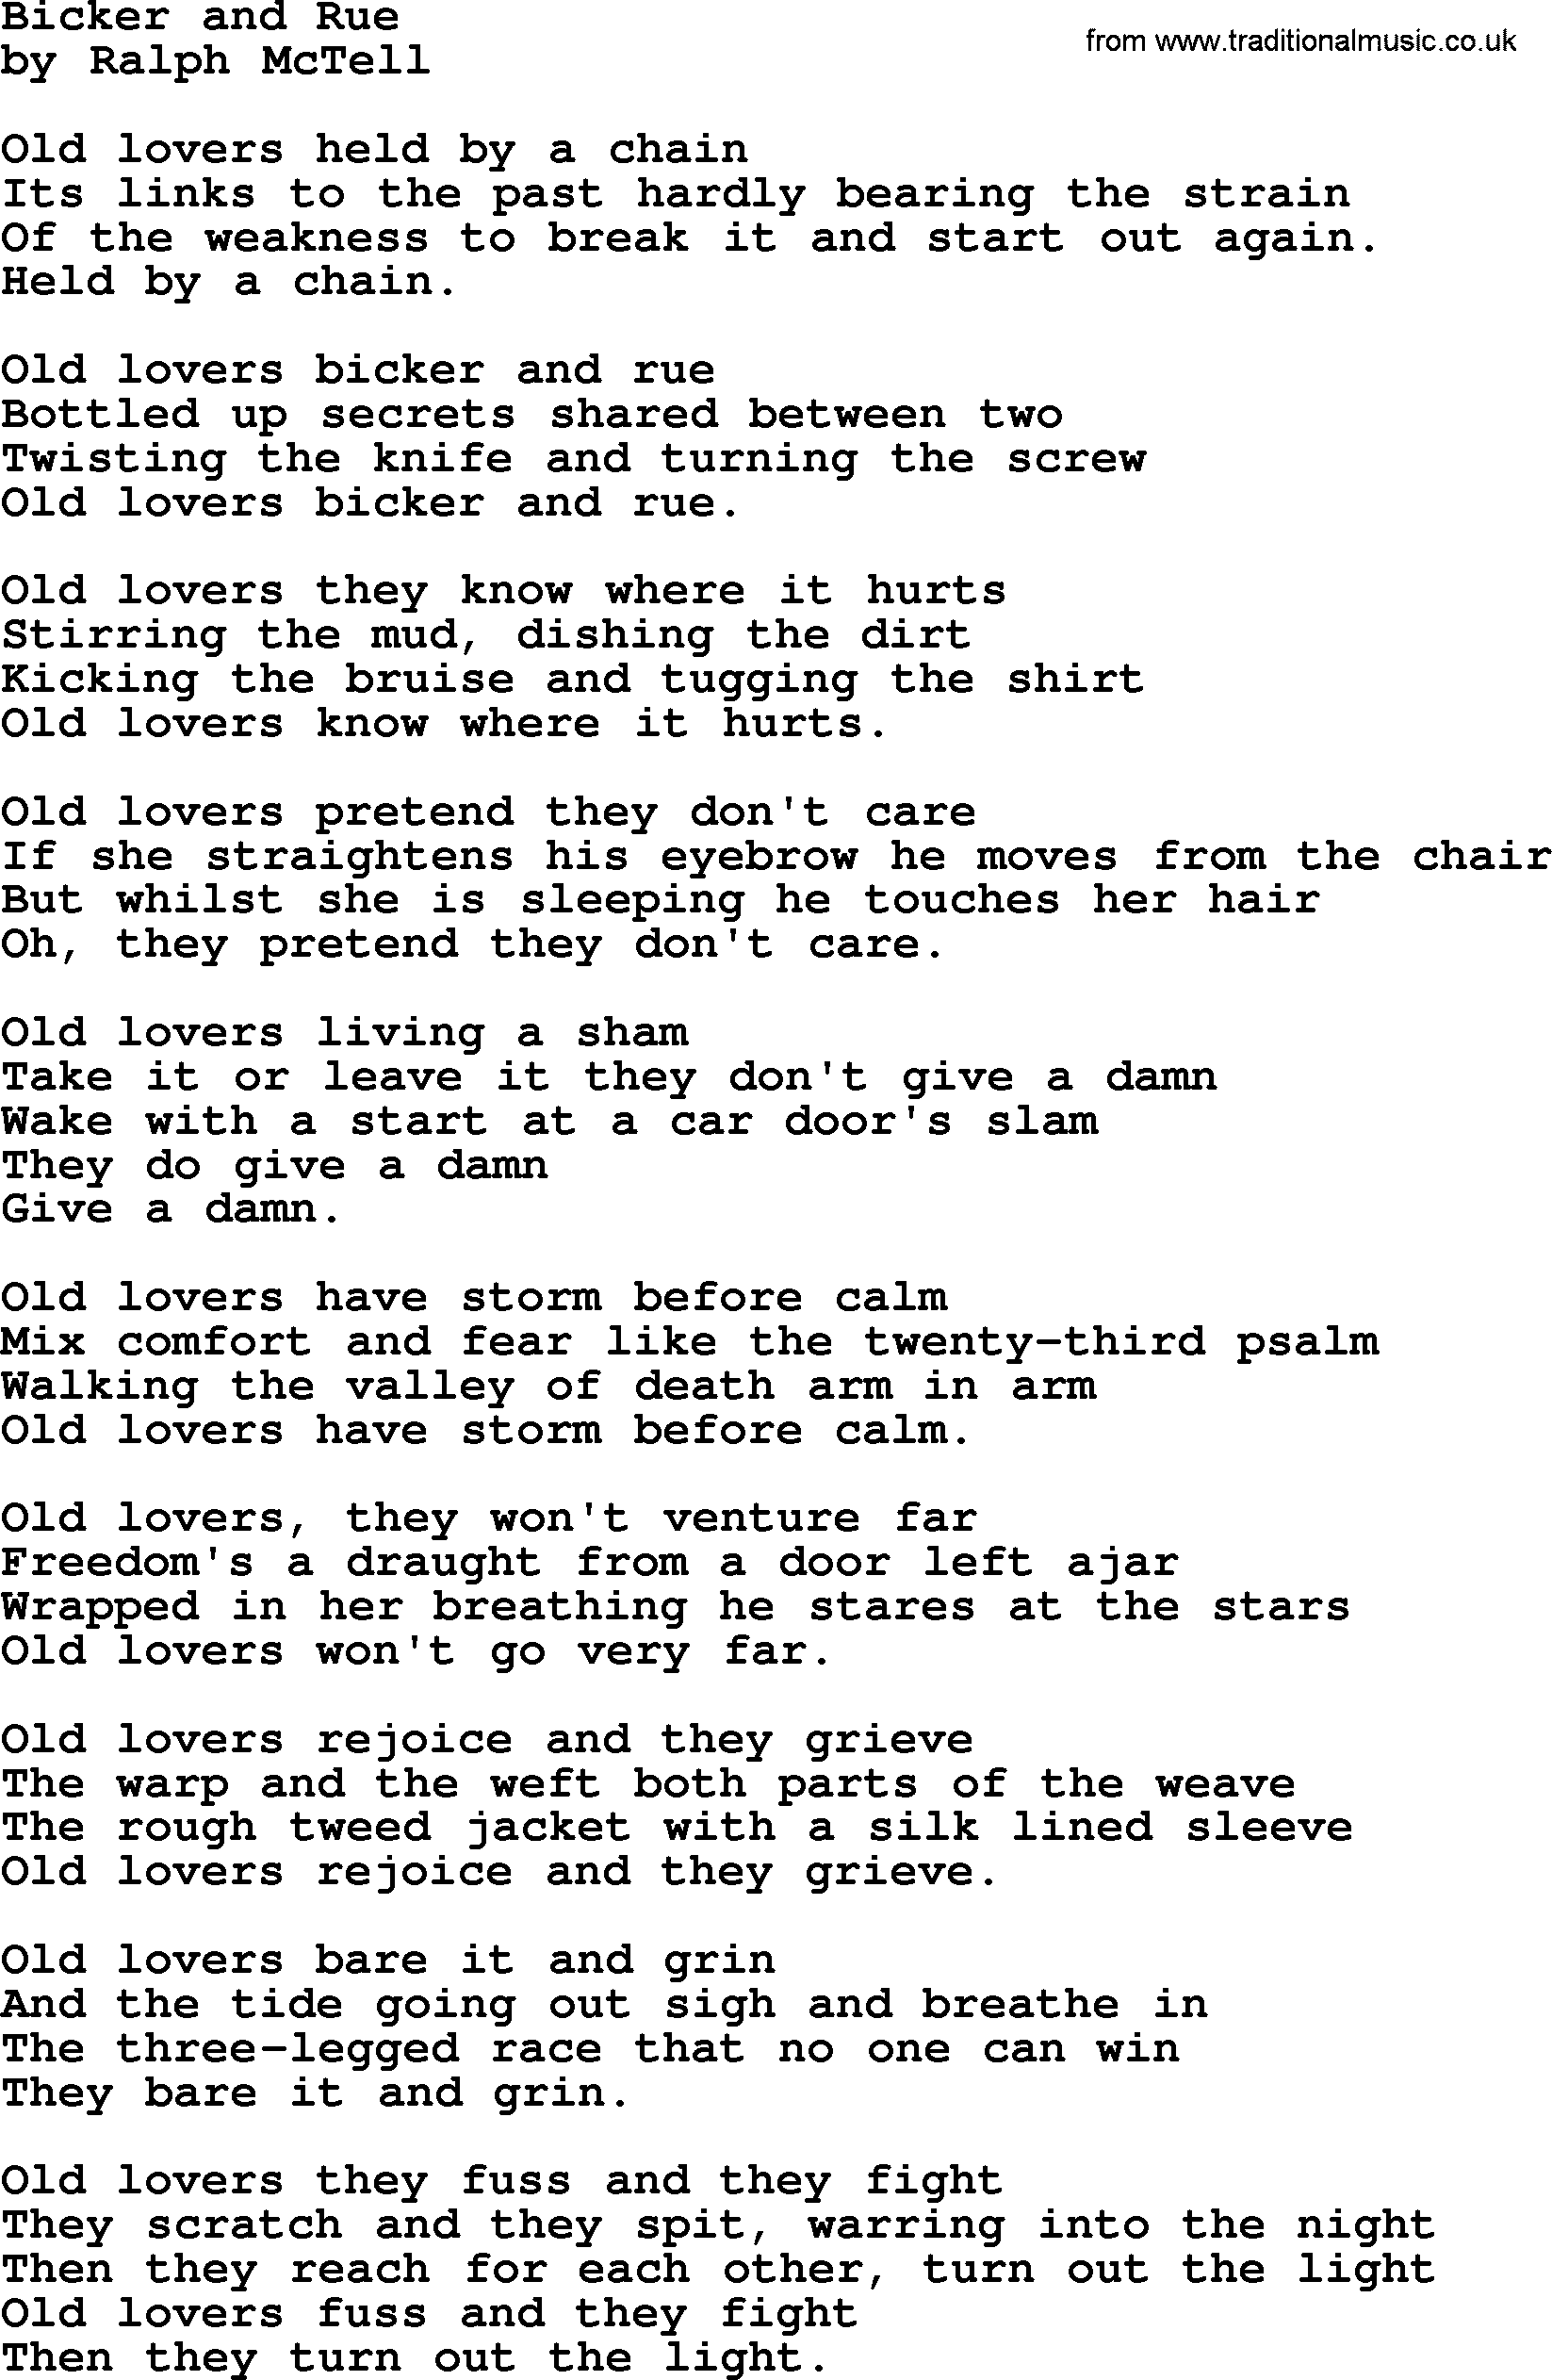 Ralph McTell Song: Bicker And Rue, lyrics